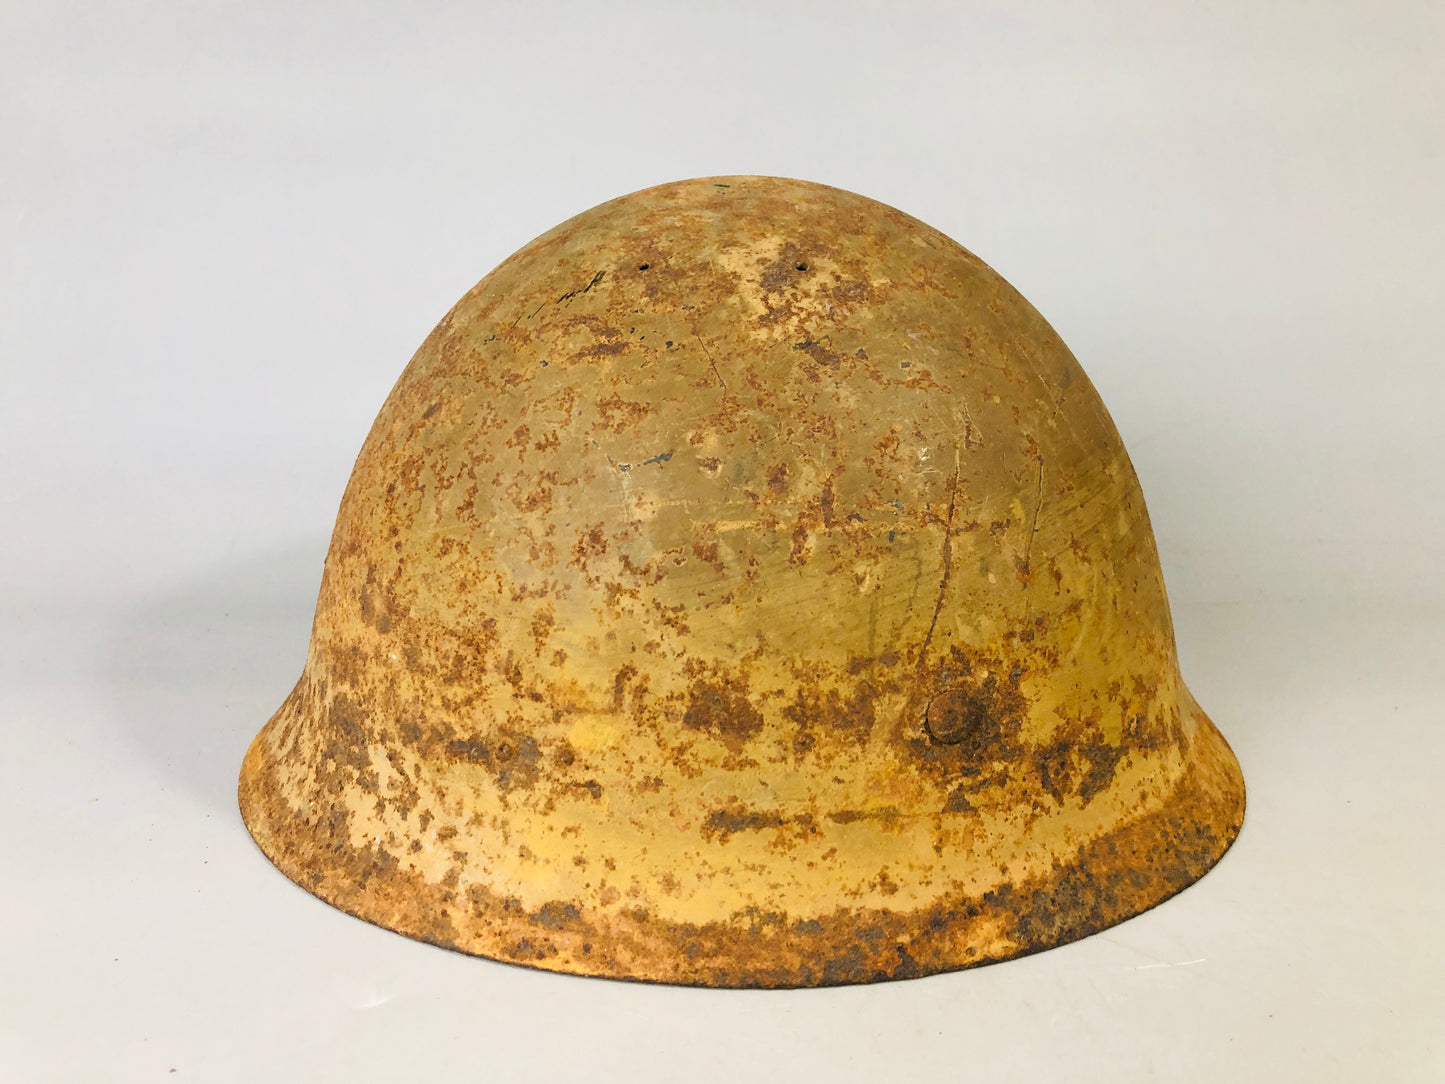 Y7133 Imperial Japan Army Iron Helmet star mark military gear Japan WW2 vintage